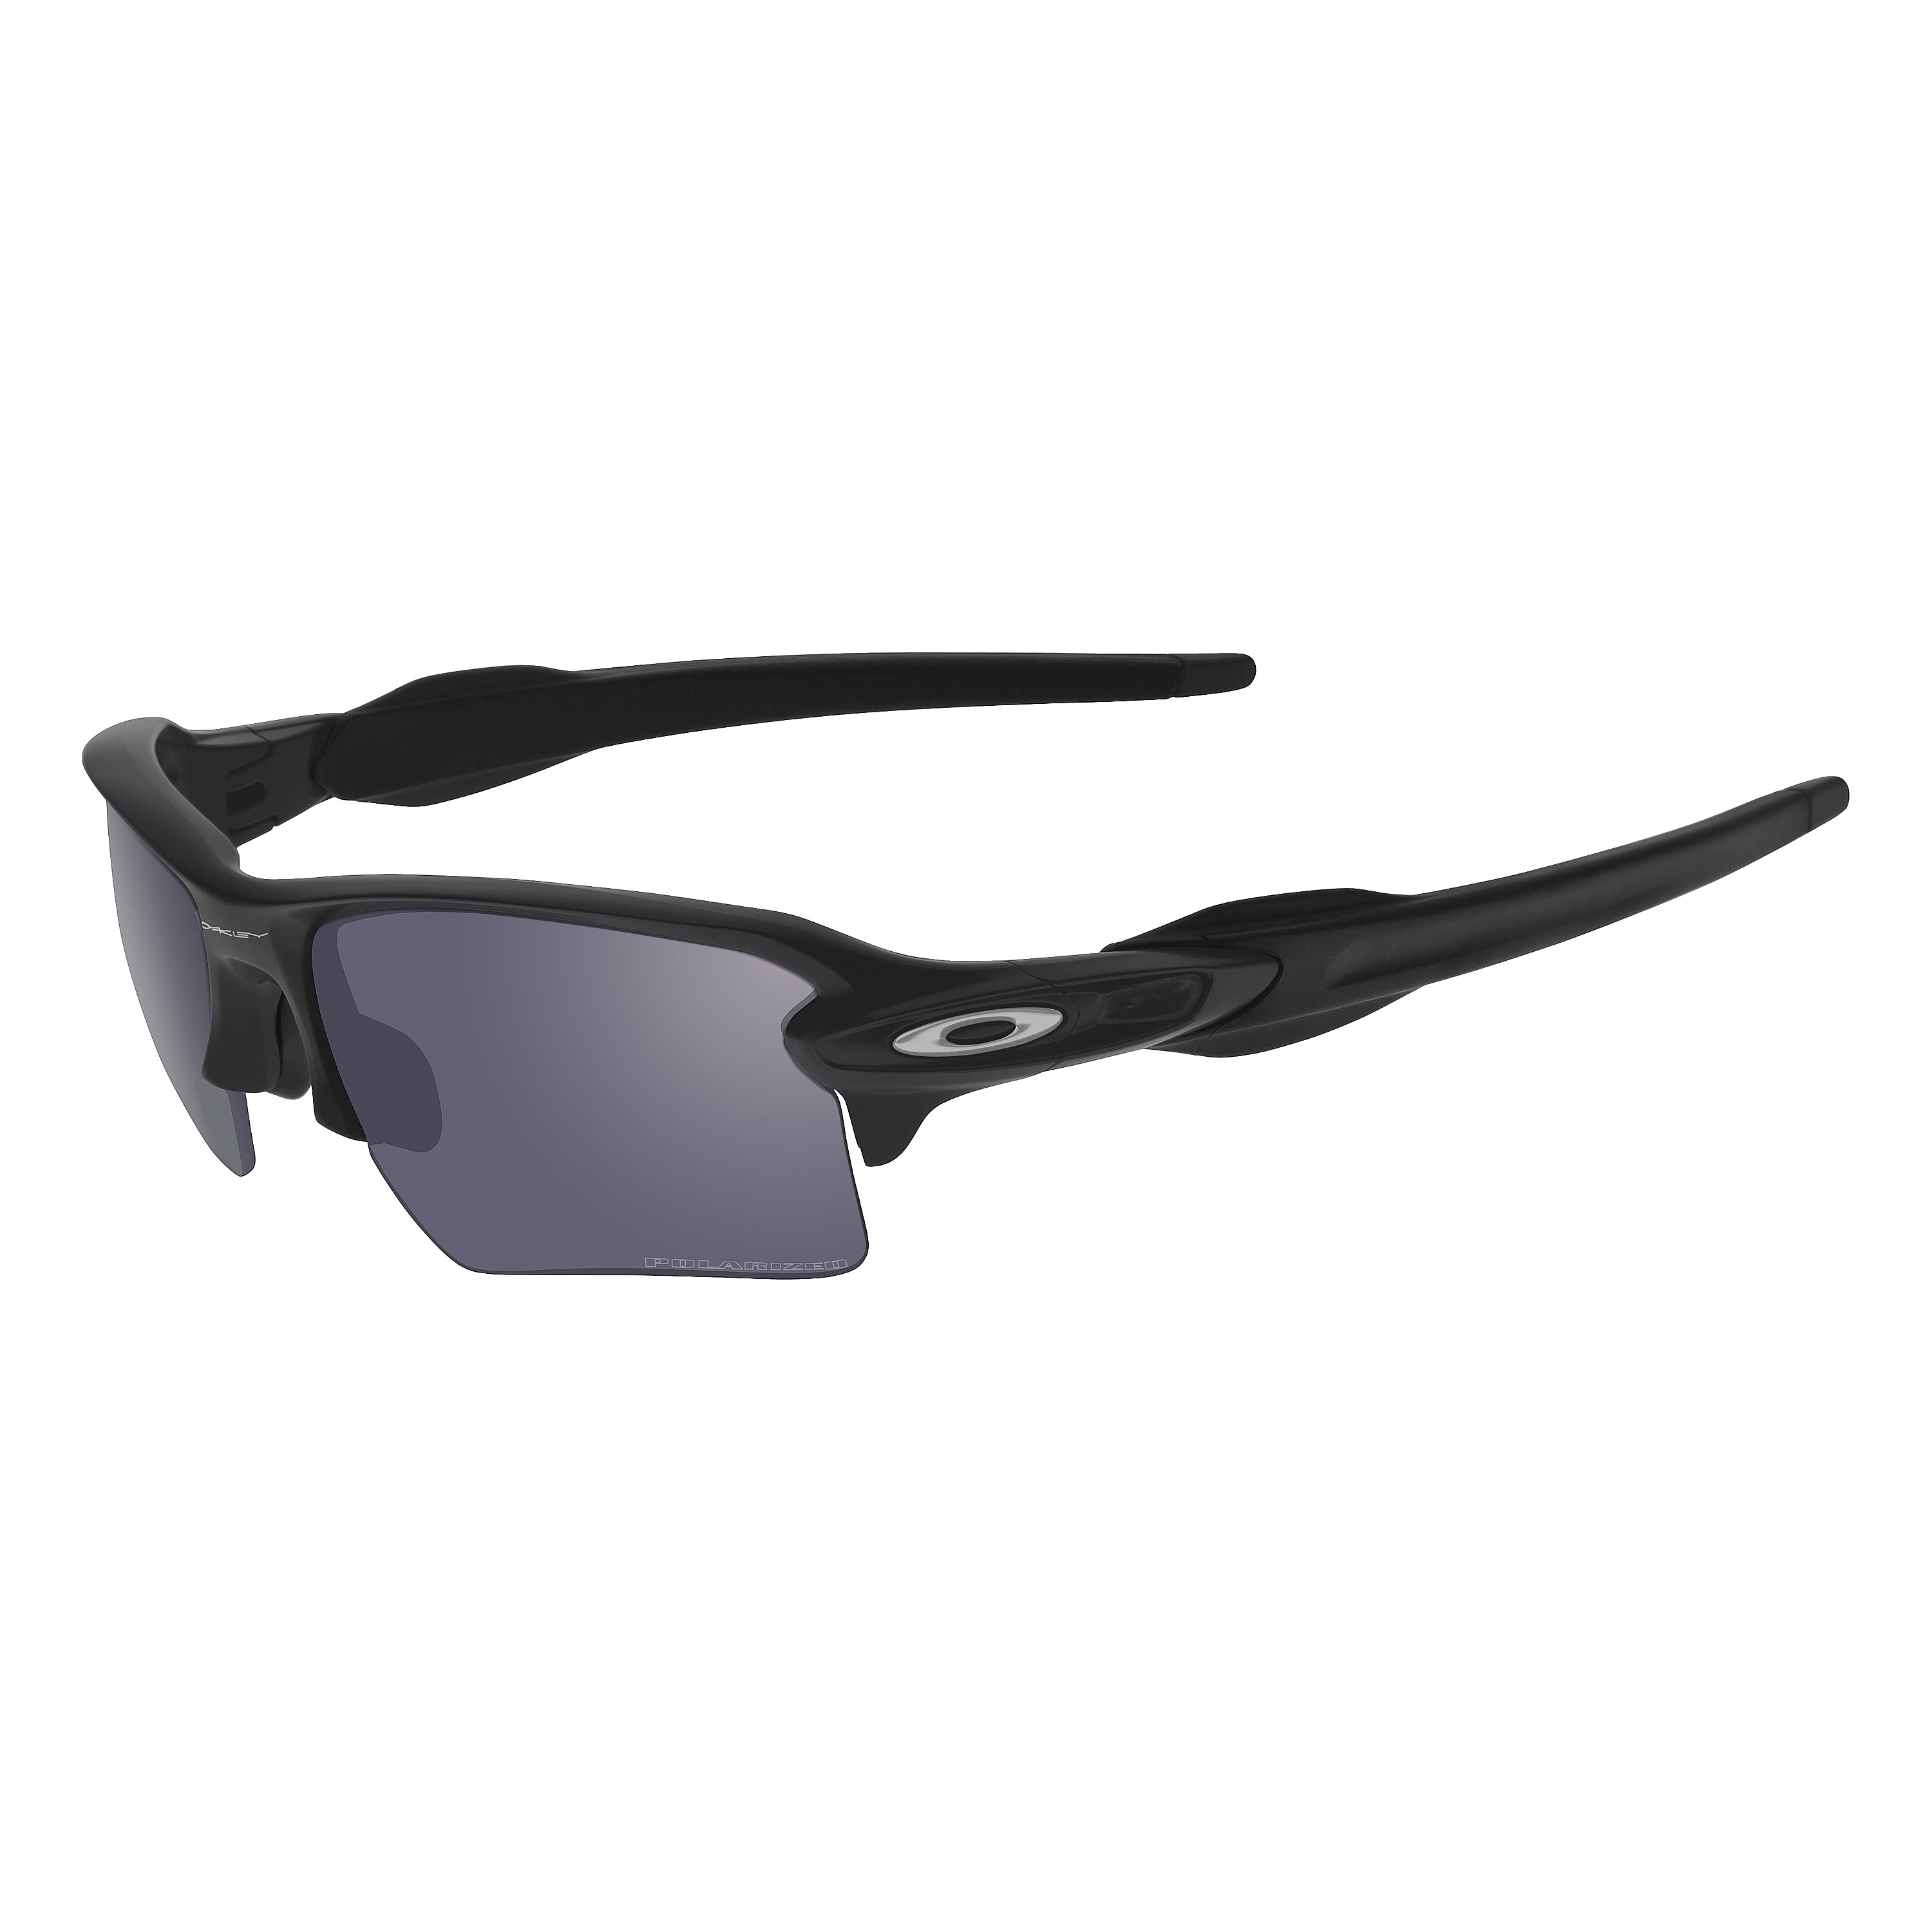 Purchase the Oakley Safety Glasses SI Flak 2.0 XL dull black/gra